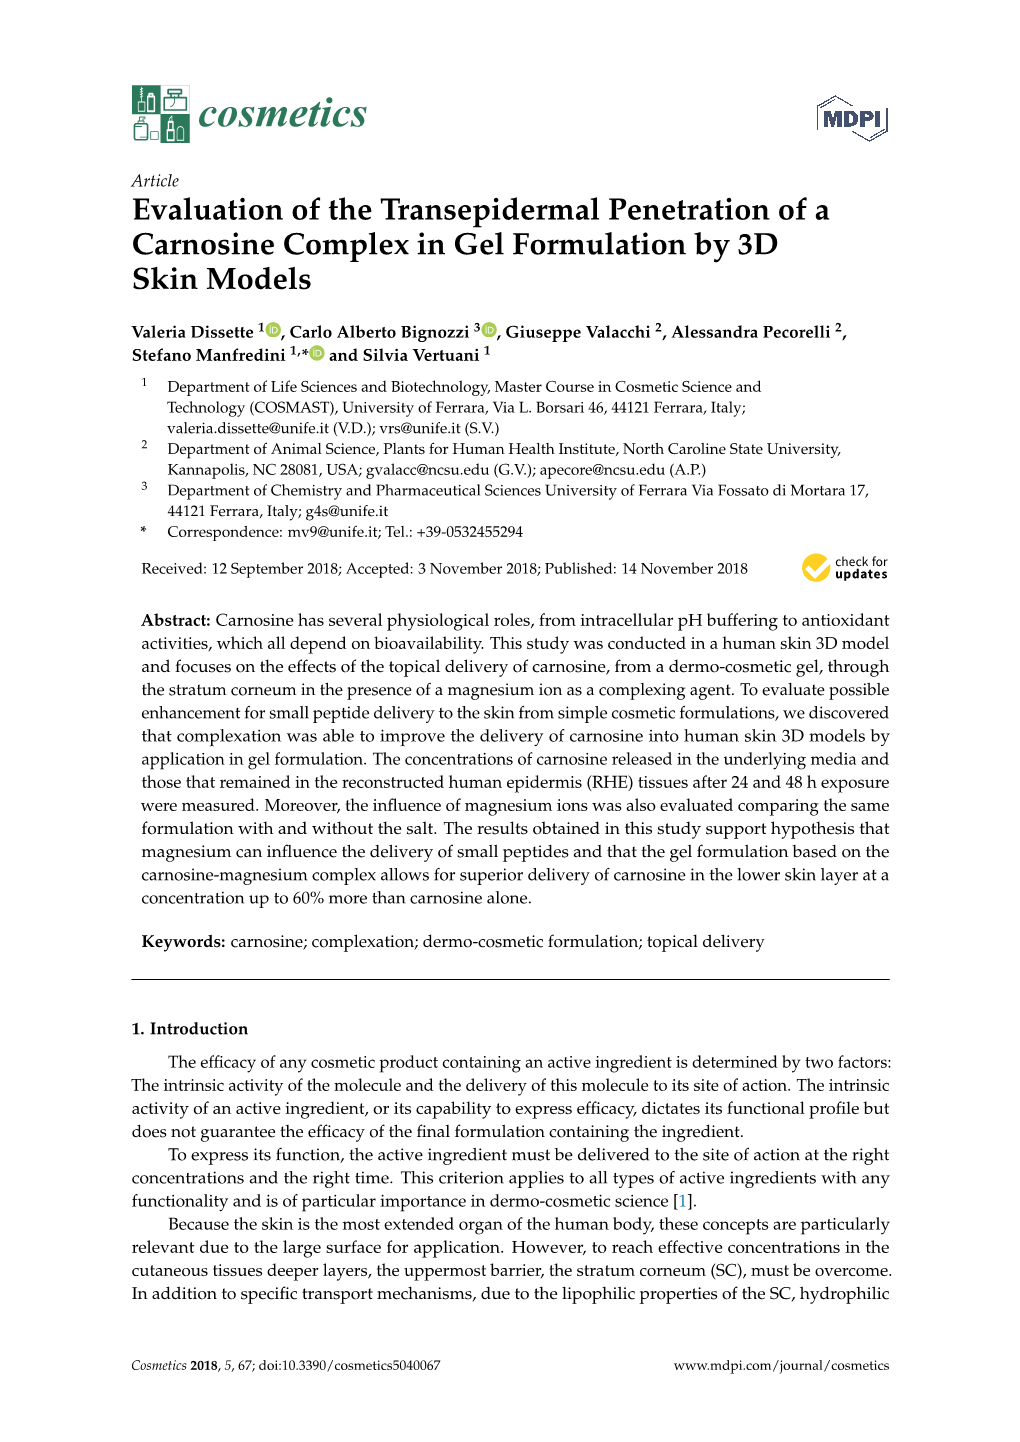 Evaluation of the Transepidermal Penetration of a Carnosine Complex in Gel Formulation by 3D Skin Models